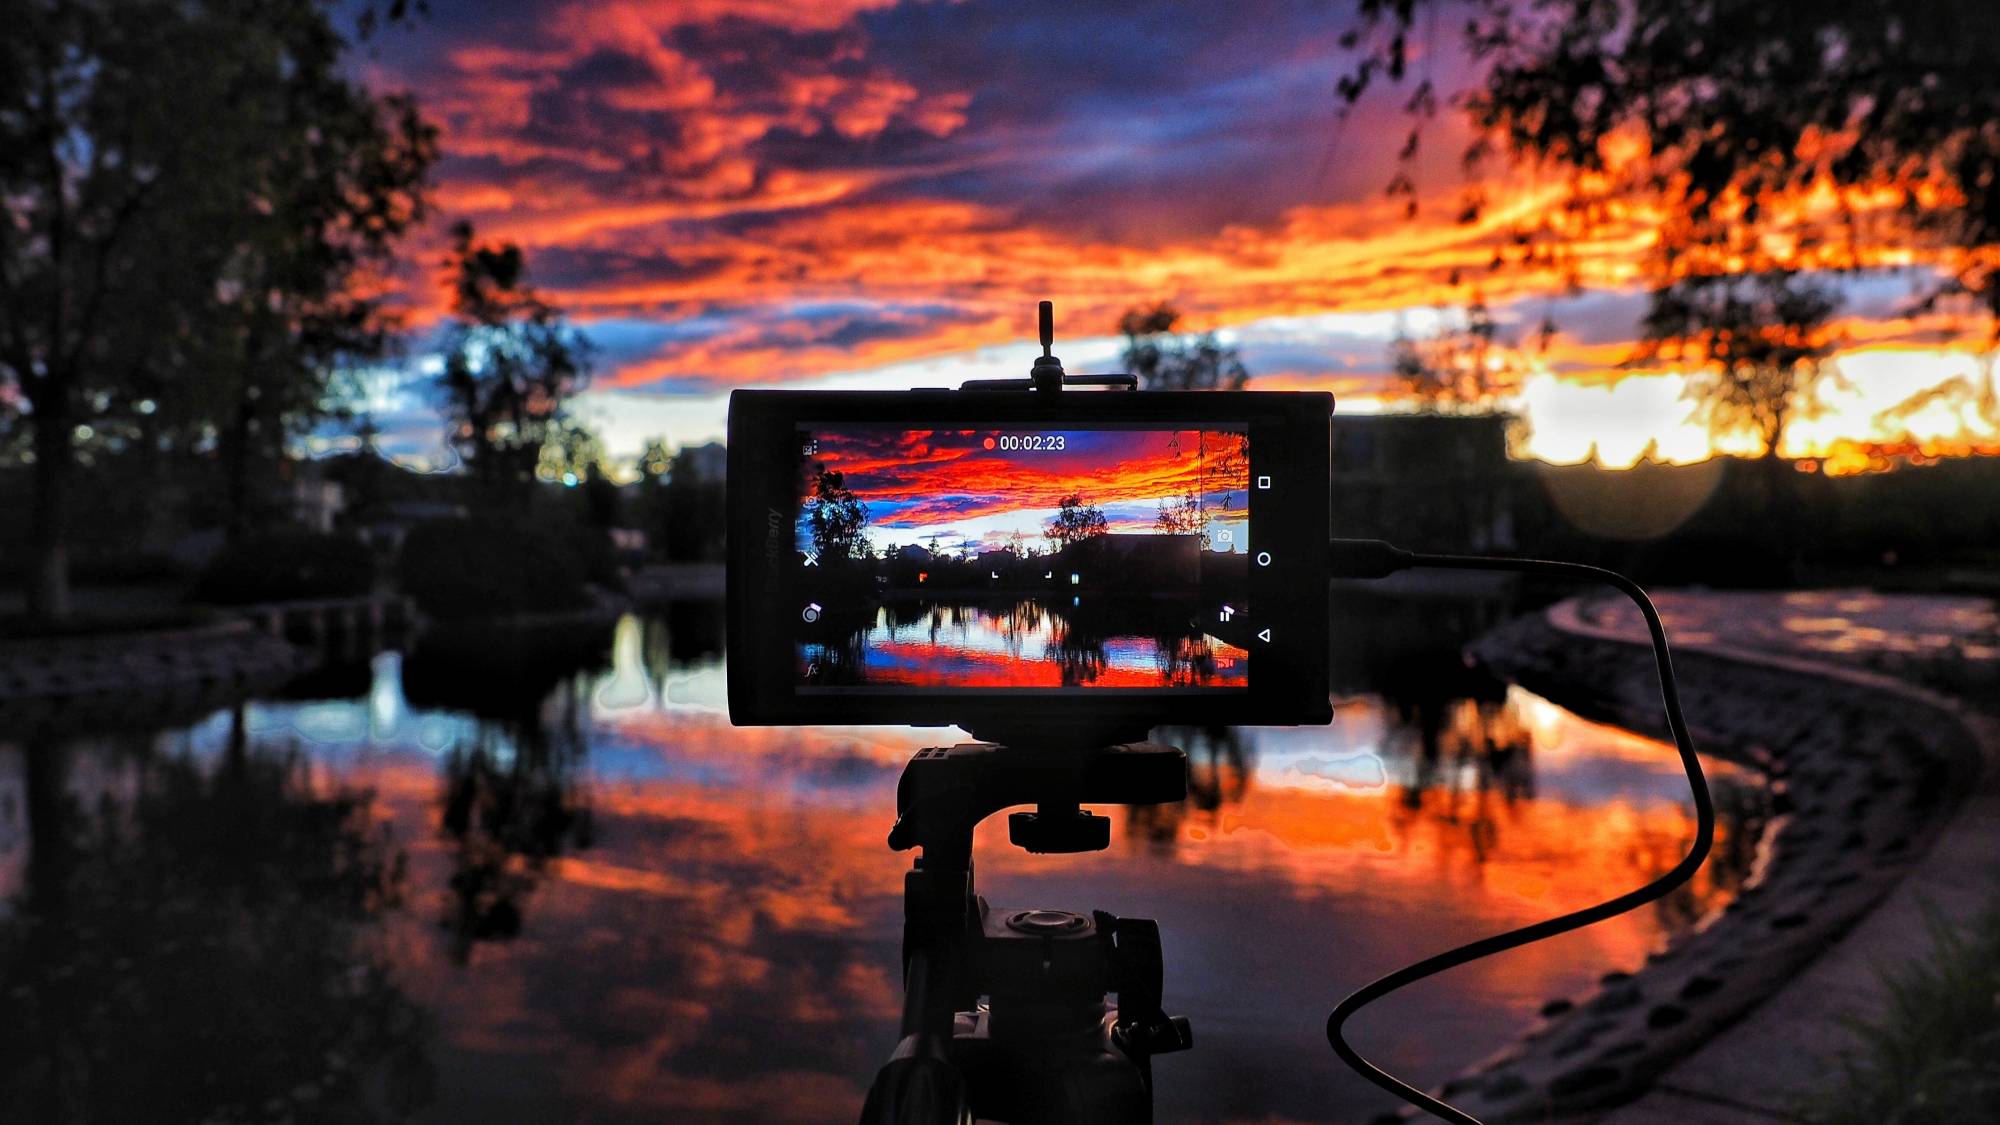 Camera on tripod setup during golden hour